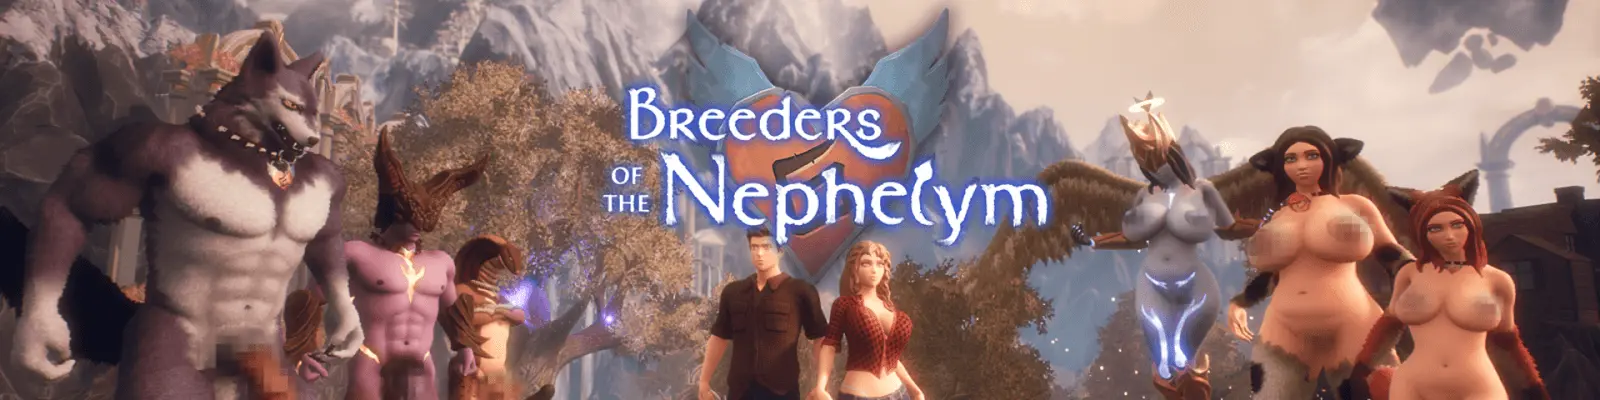 Breeders of the Nephelym [v0.753.7A] main image